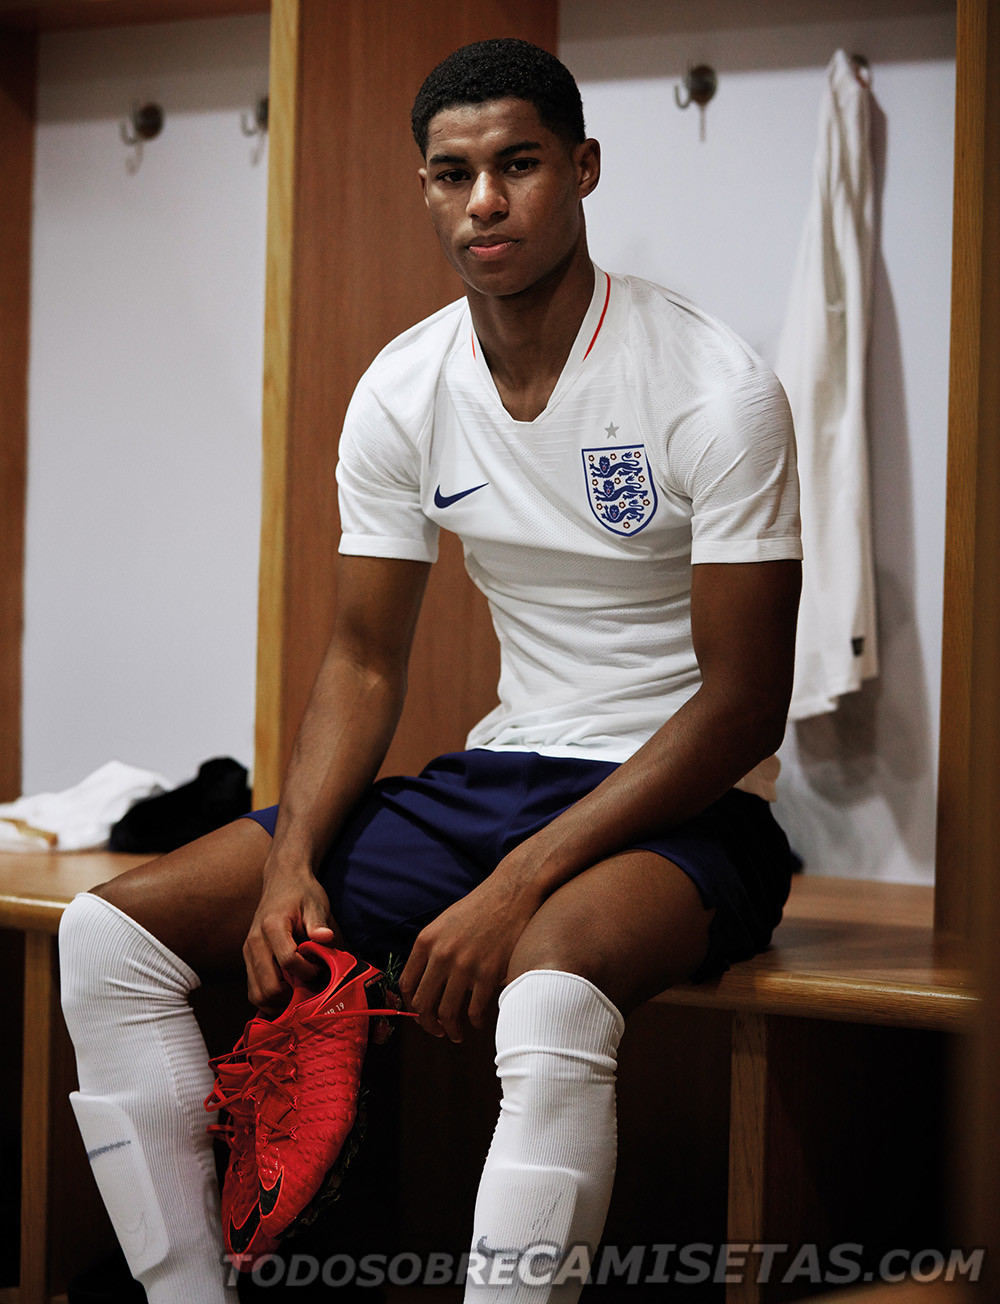 England 2018 World Cup Nike Kits